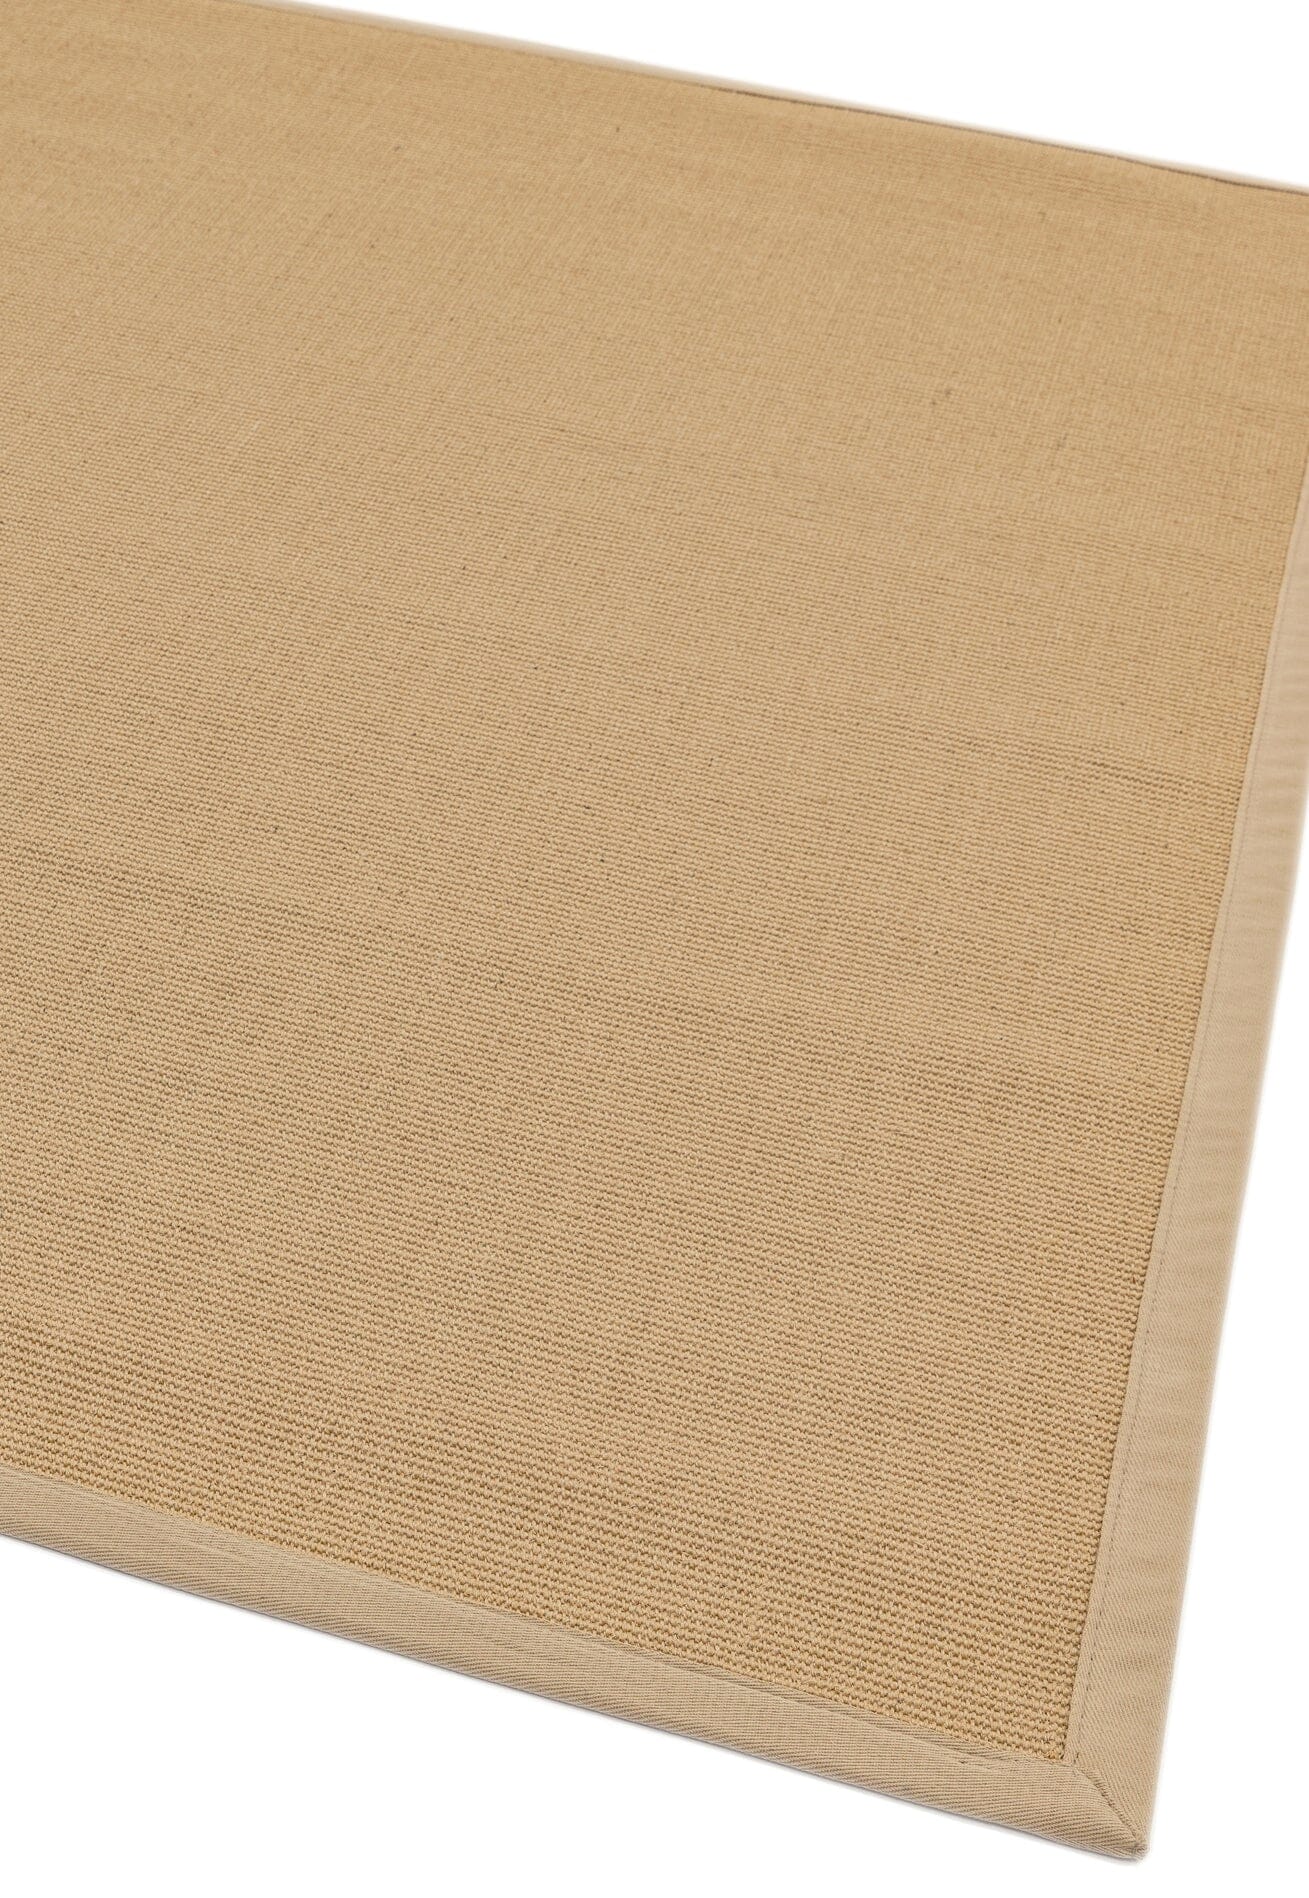  Asiatic Carpets-Asiatic Carpets Sisal Machine Woven Rug Linen/Linen - 68 x 240cm-Beige, Natural 421 